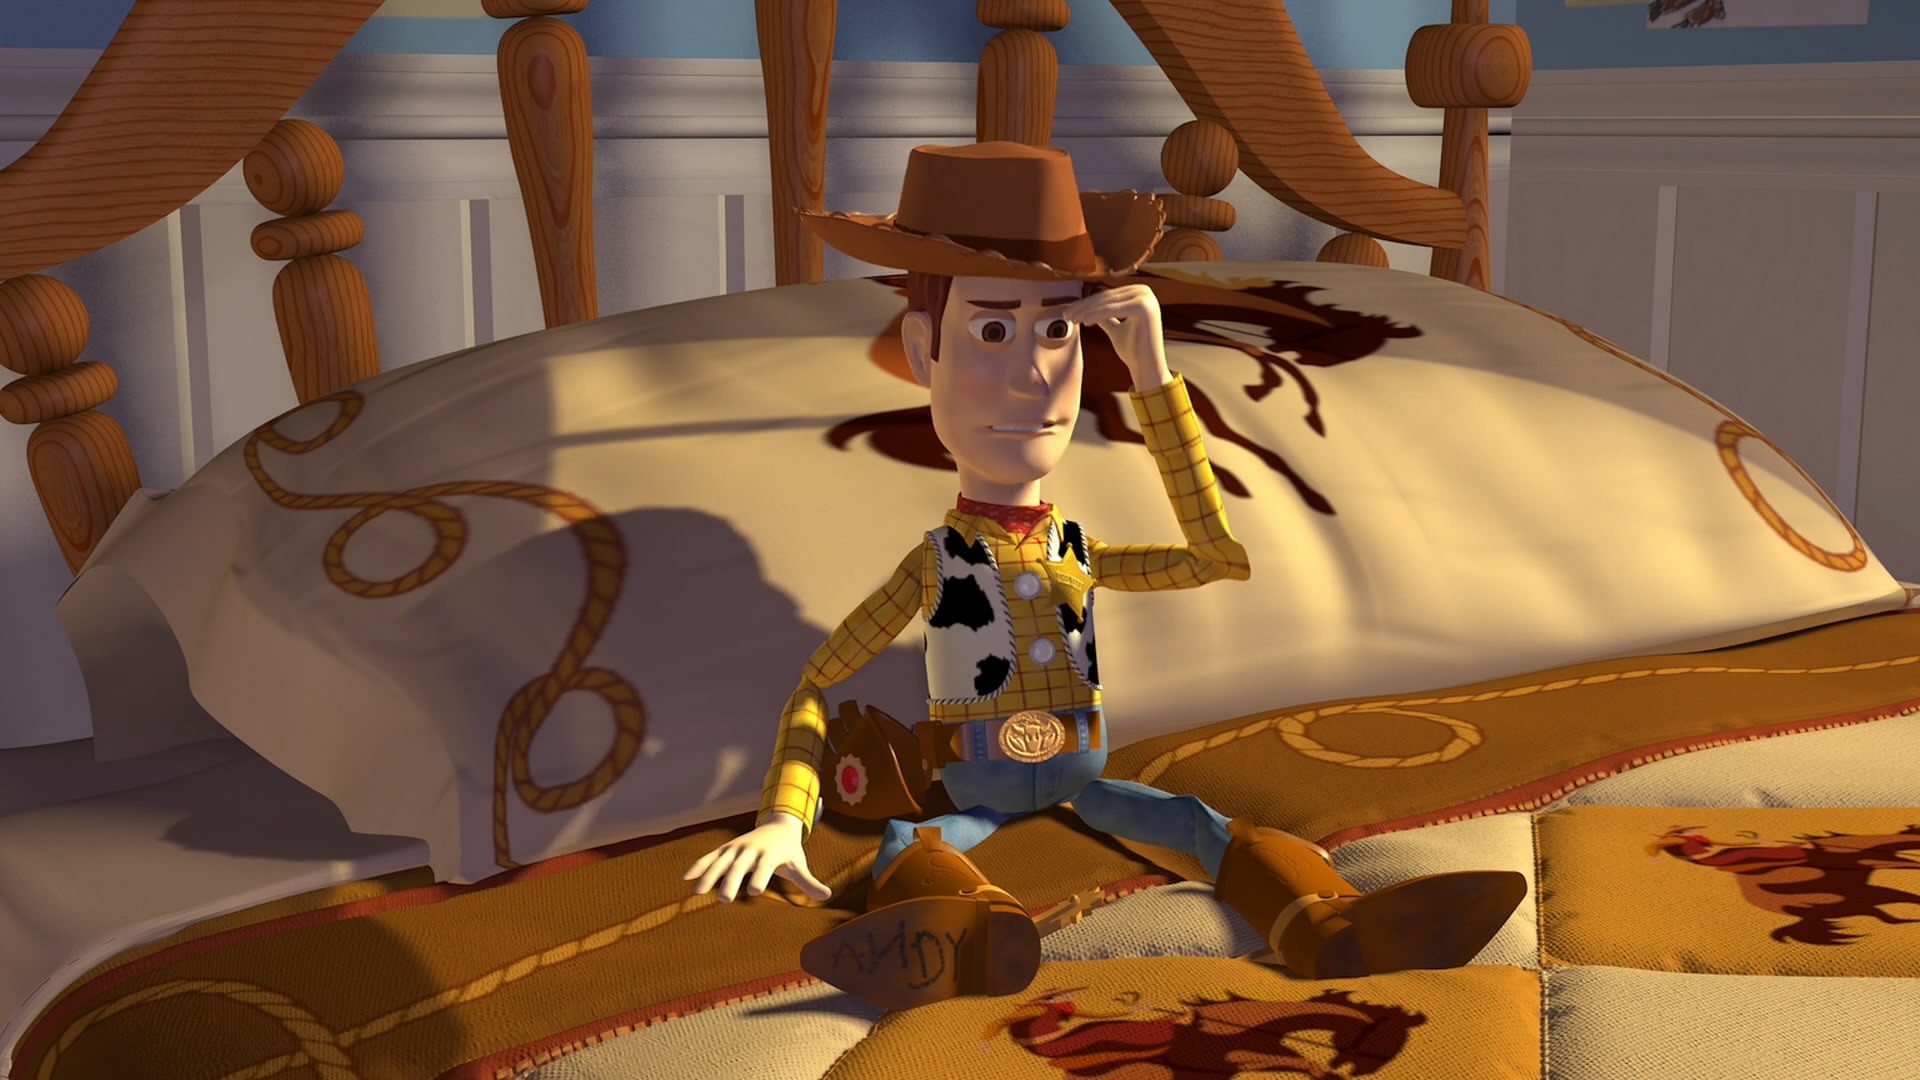 Sheriff Woody, Toy Story, Disney Pixar Wallpapers HD / Desktop and